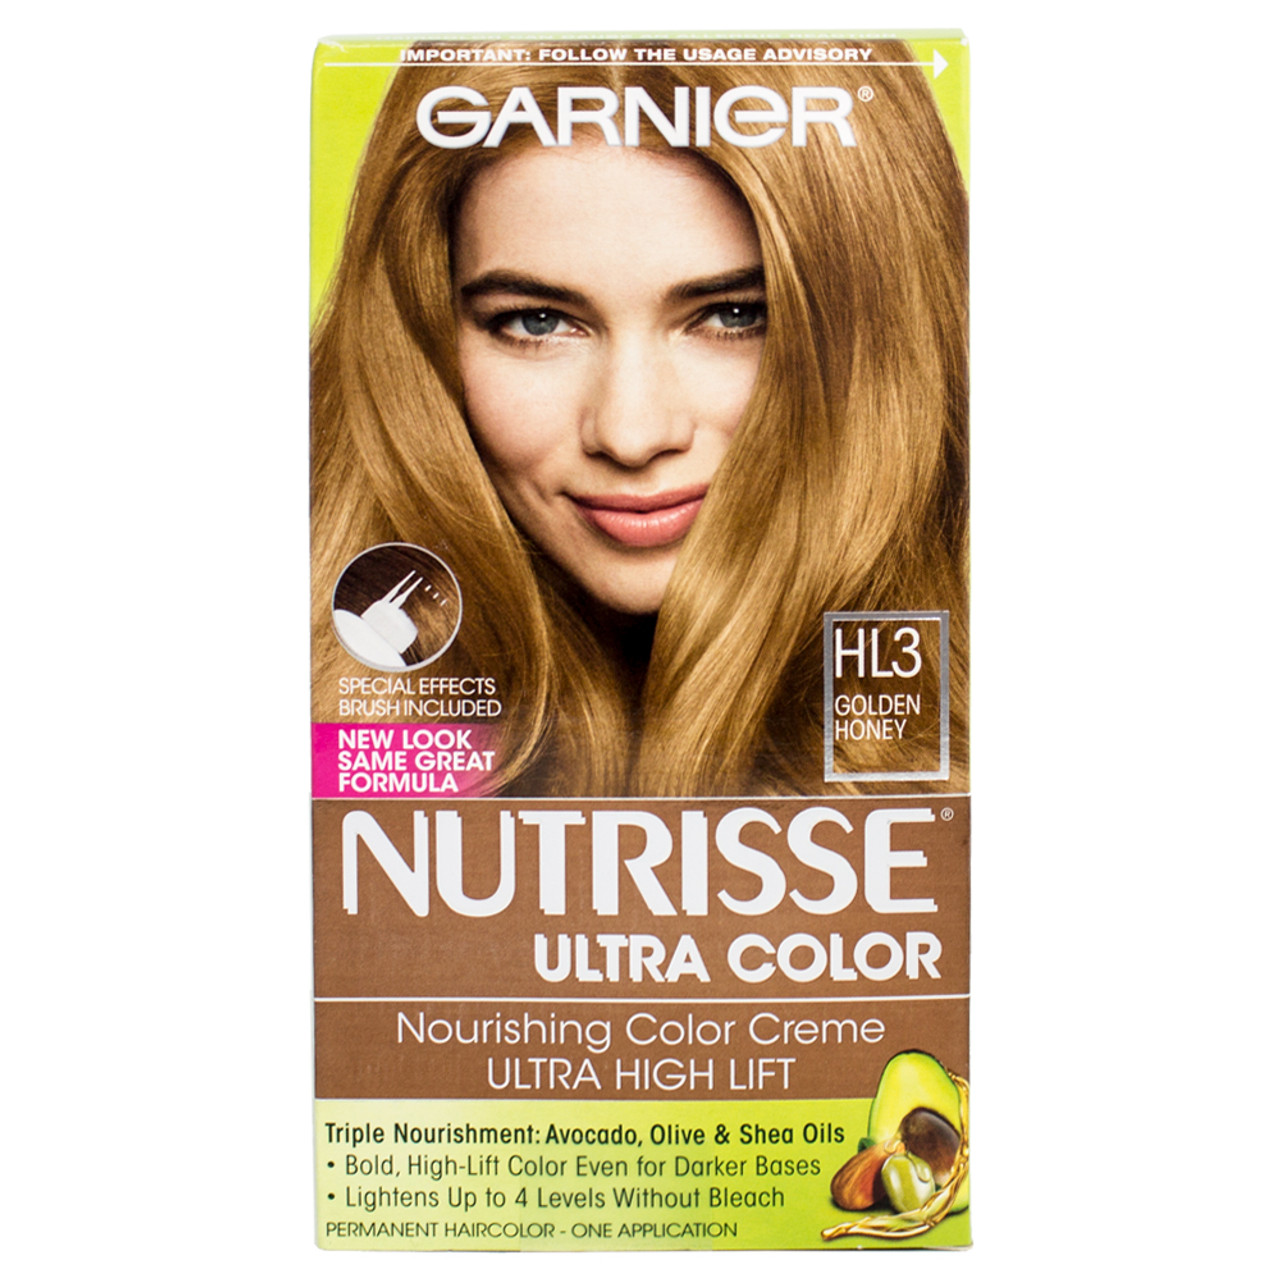 Nourishing Ultra Nutrisse Creme Hair Color Garnier